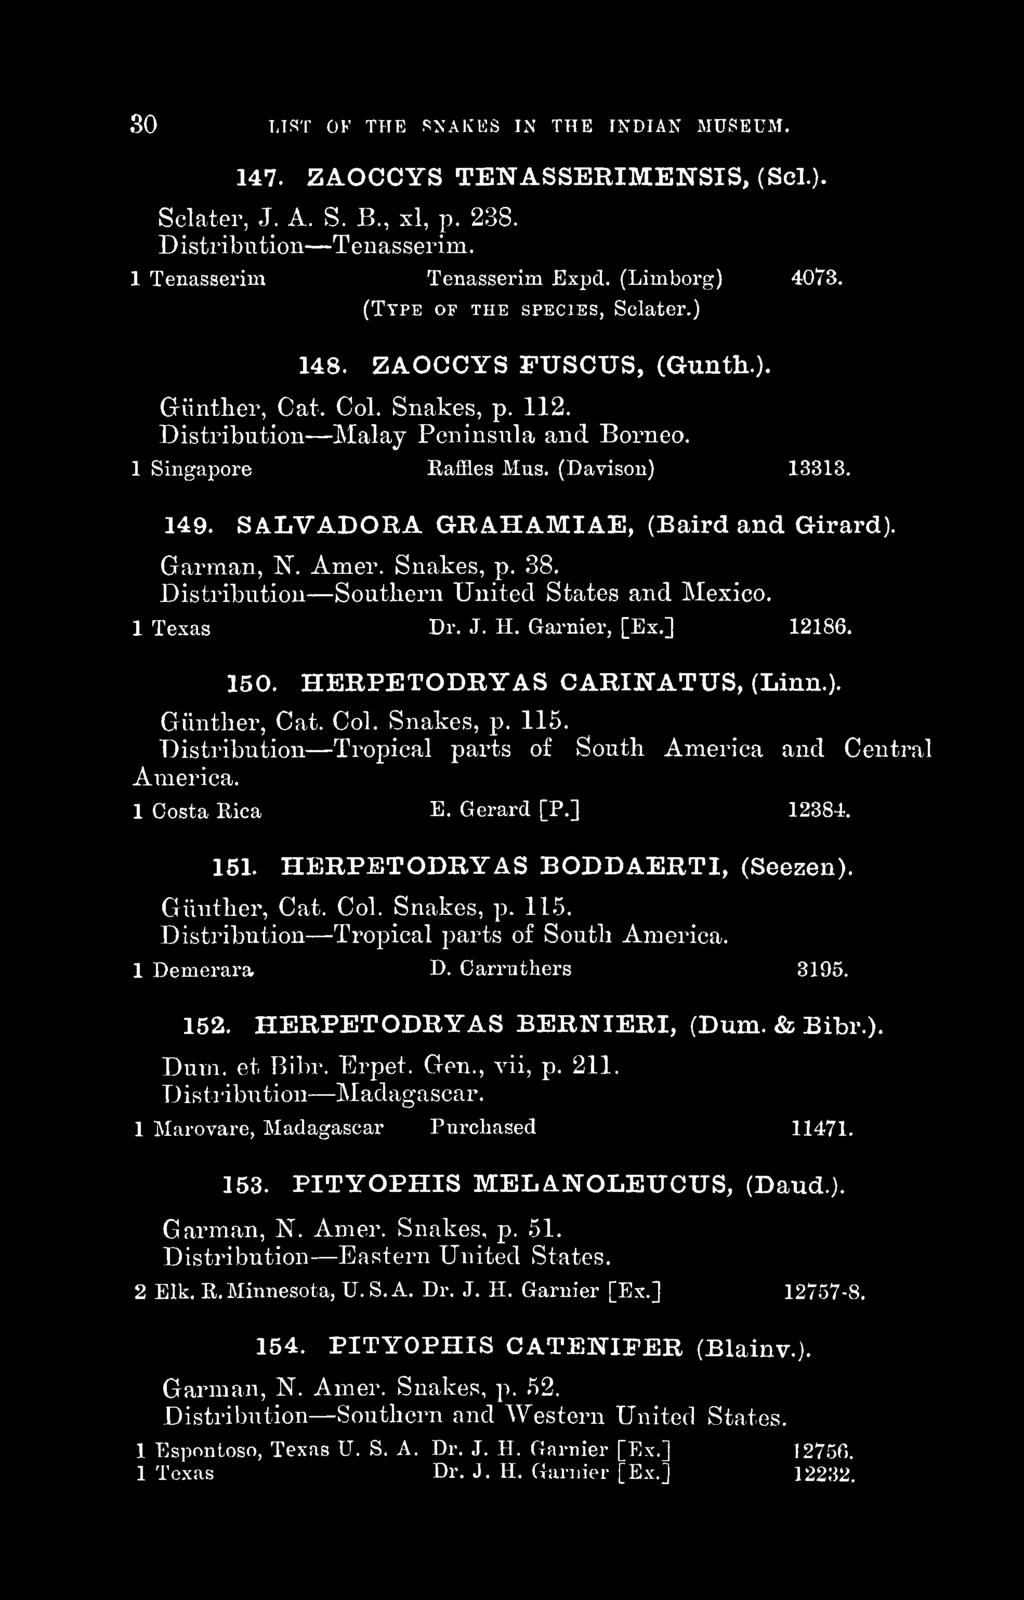 SALVADORA GRAHAMIAE, (Baird and Girard). Garman, N. Amer. Snakes, p. 38. Distribution Southern United States and Mexico. 1 Texas Dr. J. H. Garnier, [Ex.] 12186. 150. HERPETODRYAS CARINATUS, (Linn.). Giinther, Cat.